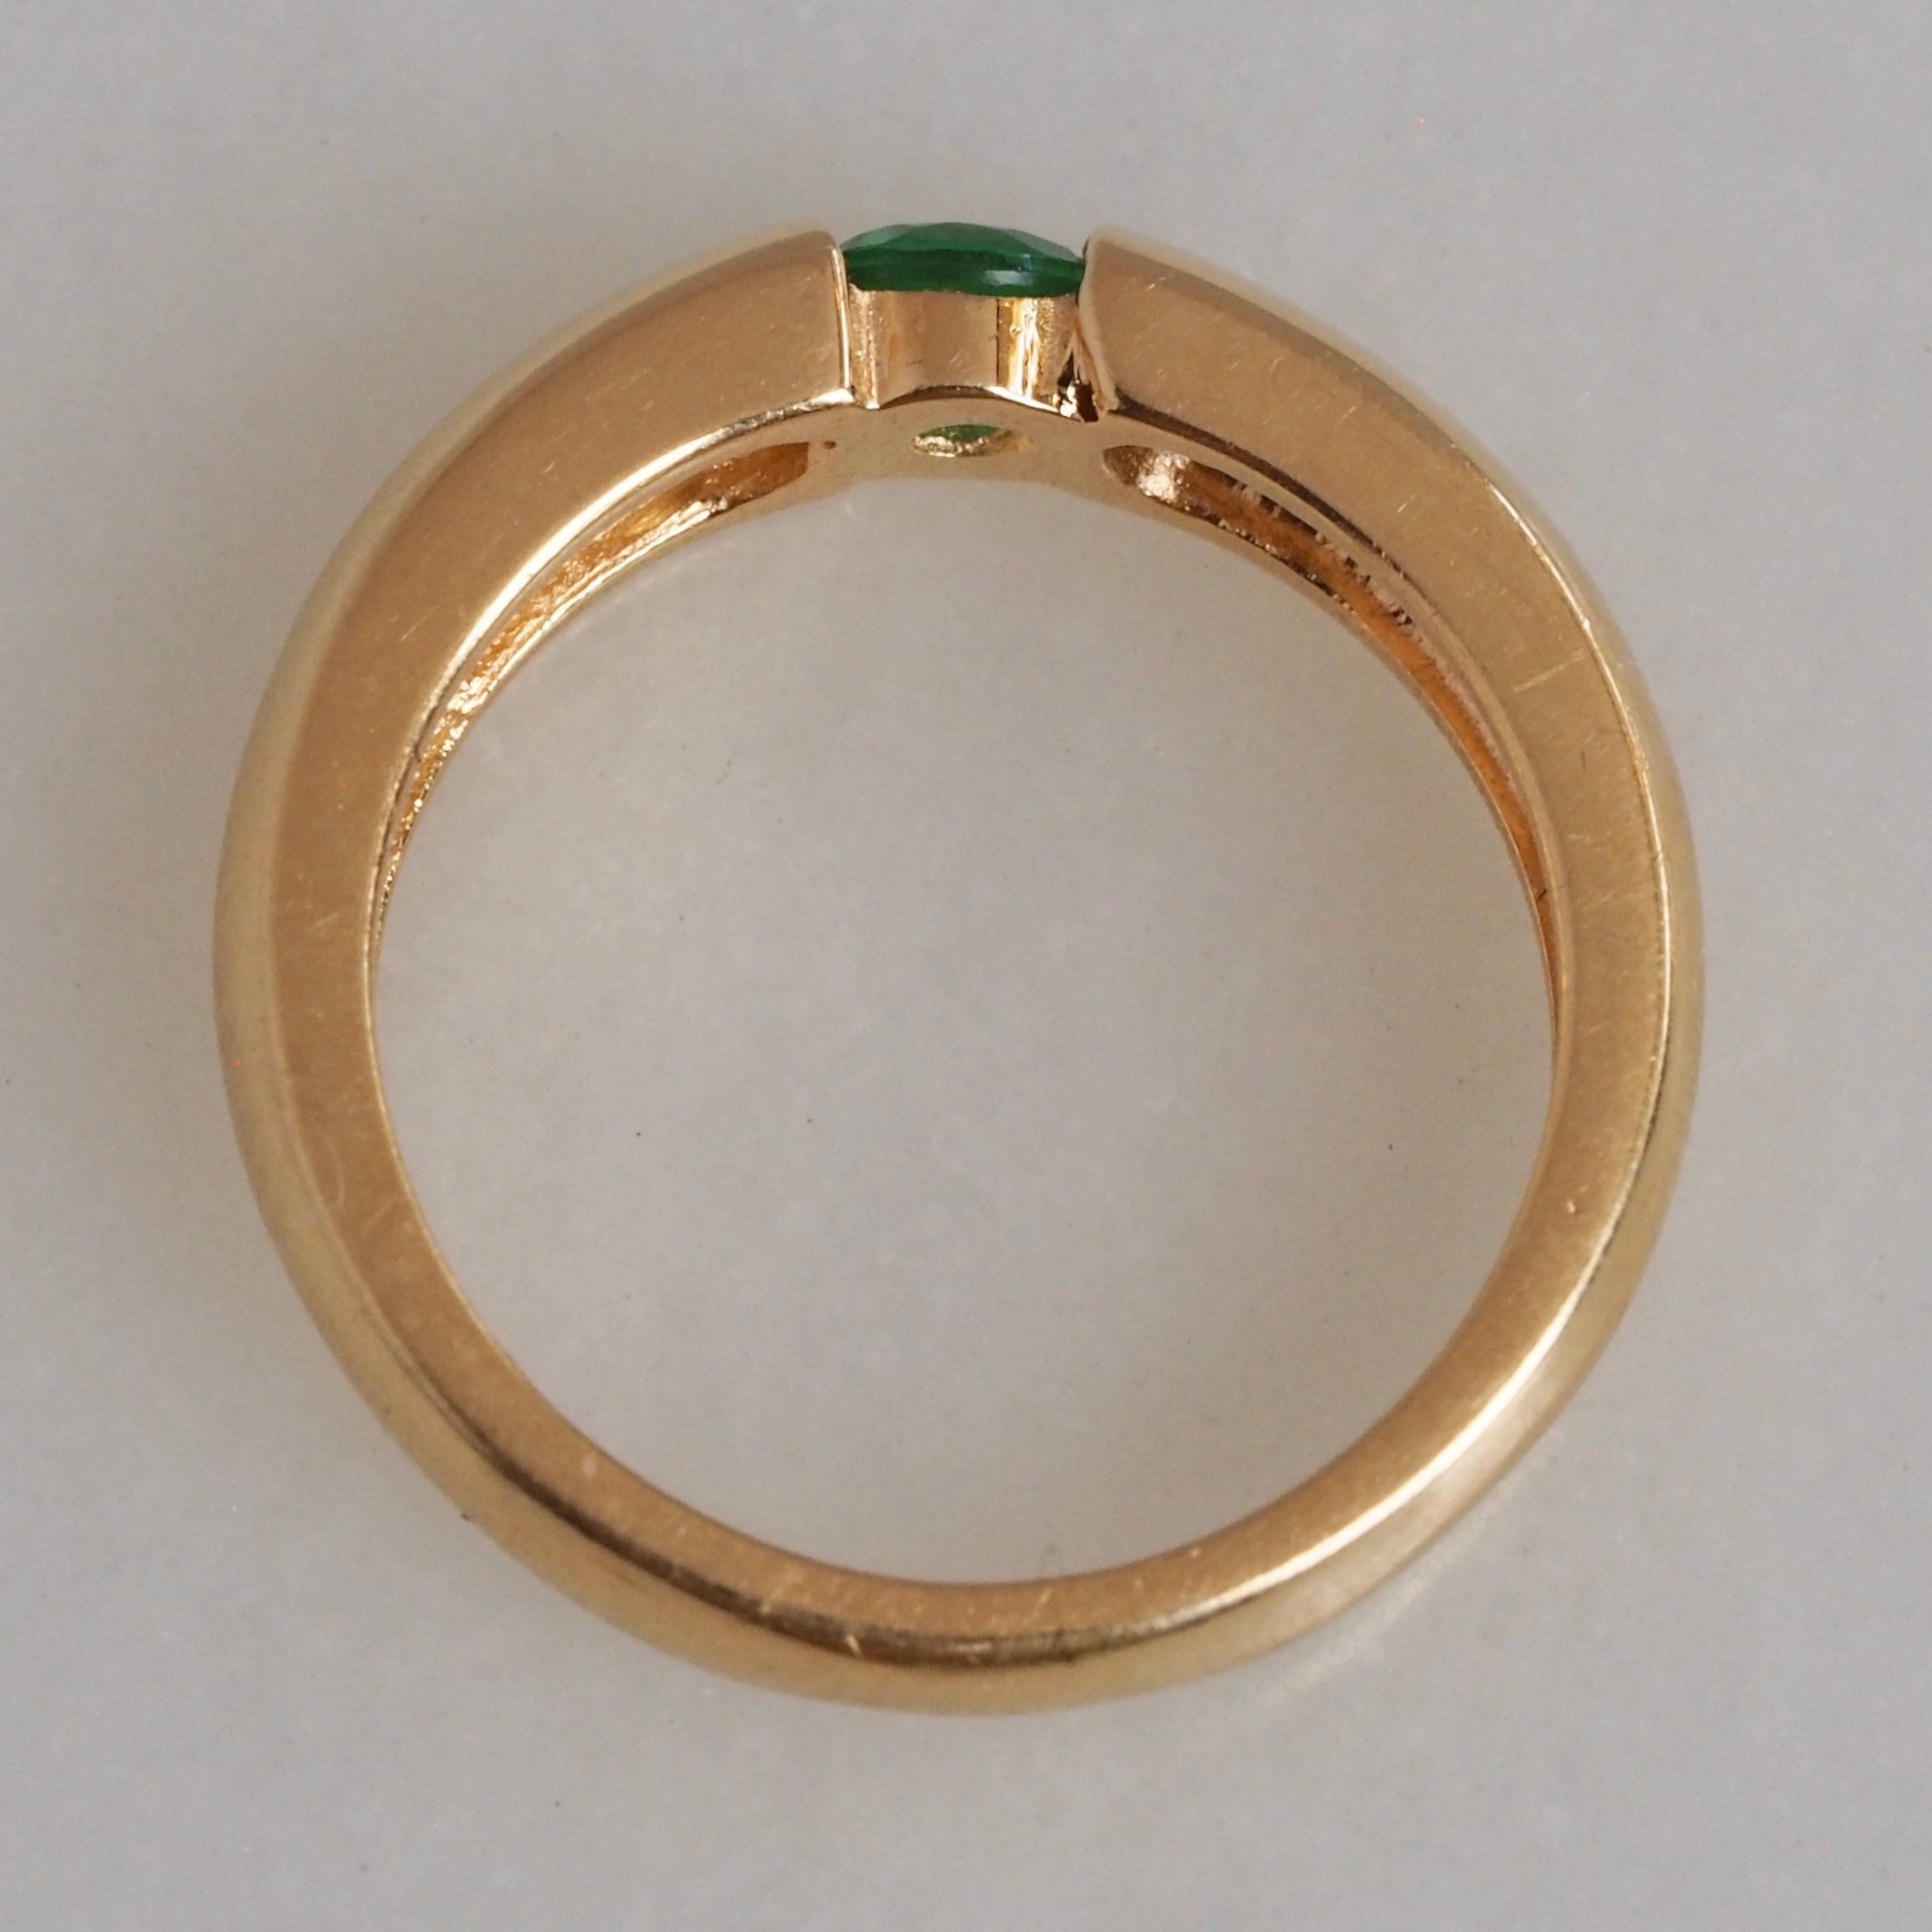 Modernist 18k Gold Emerald Ring